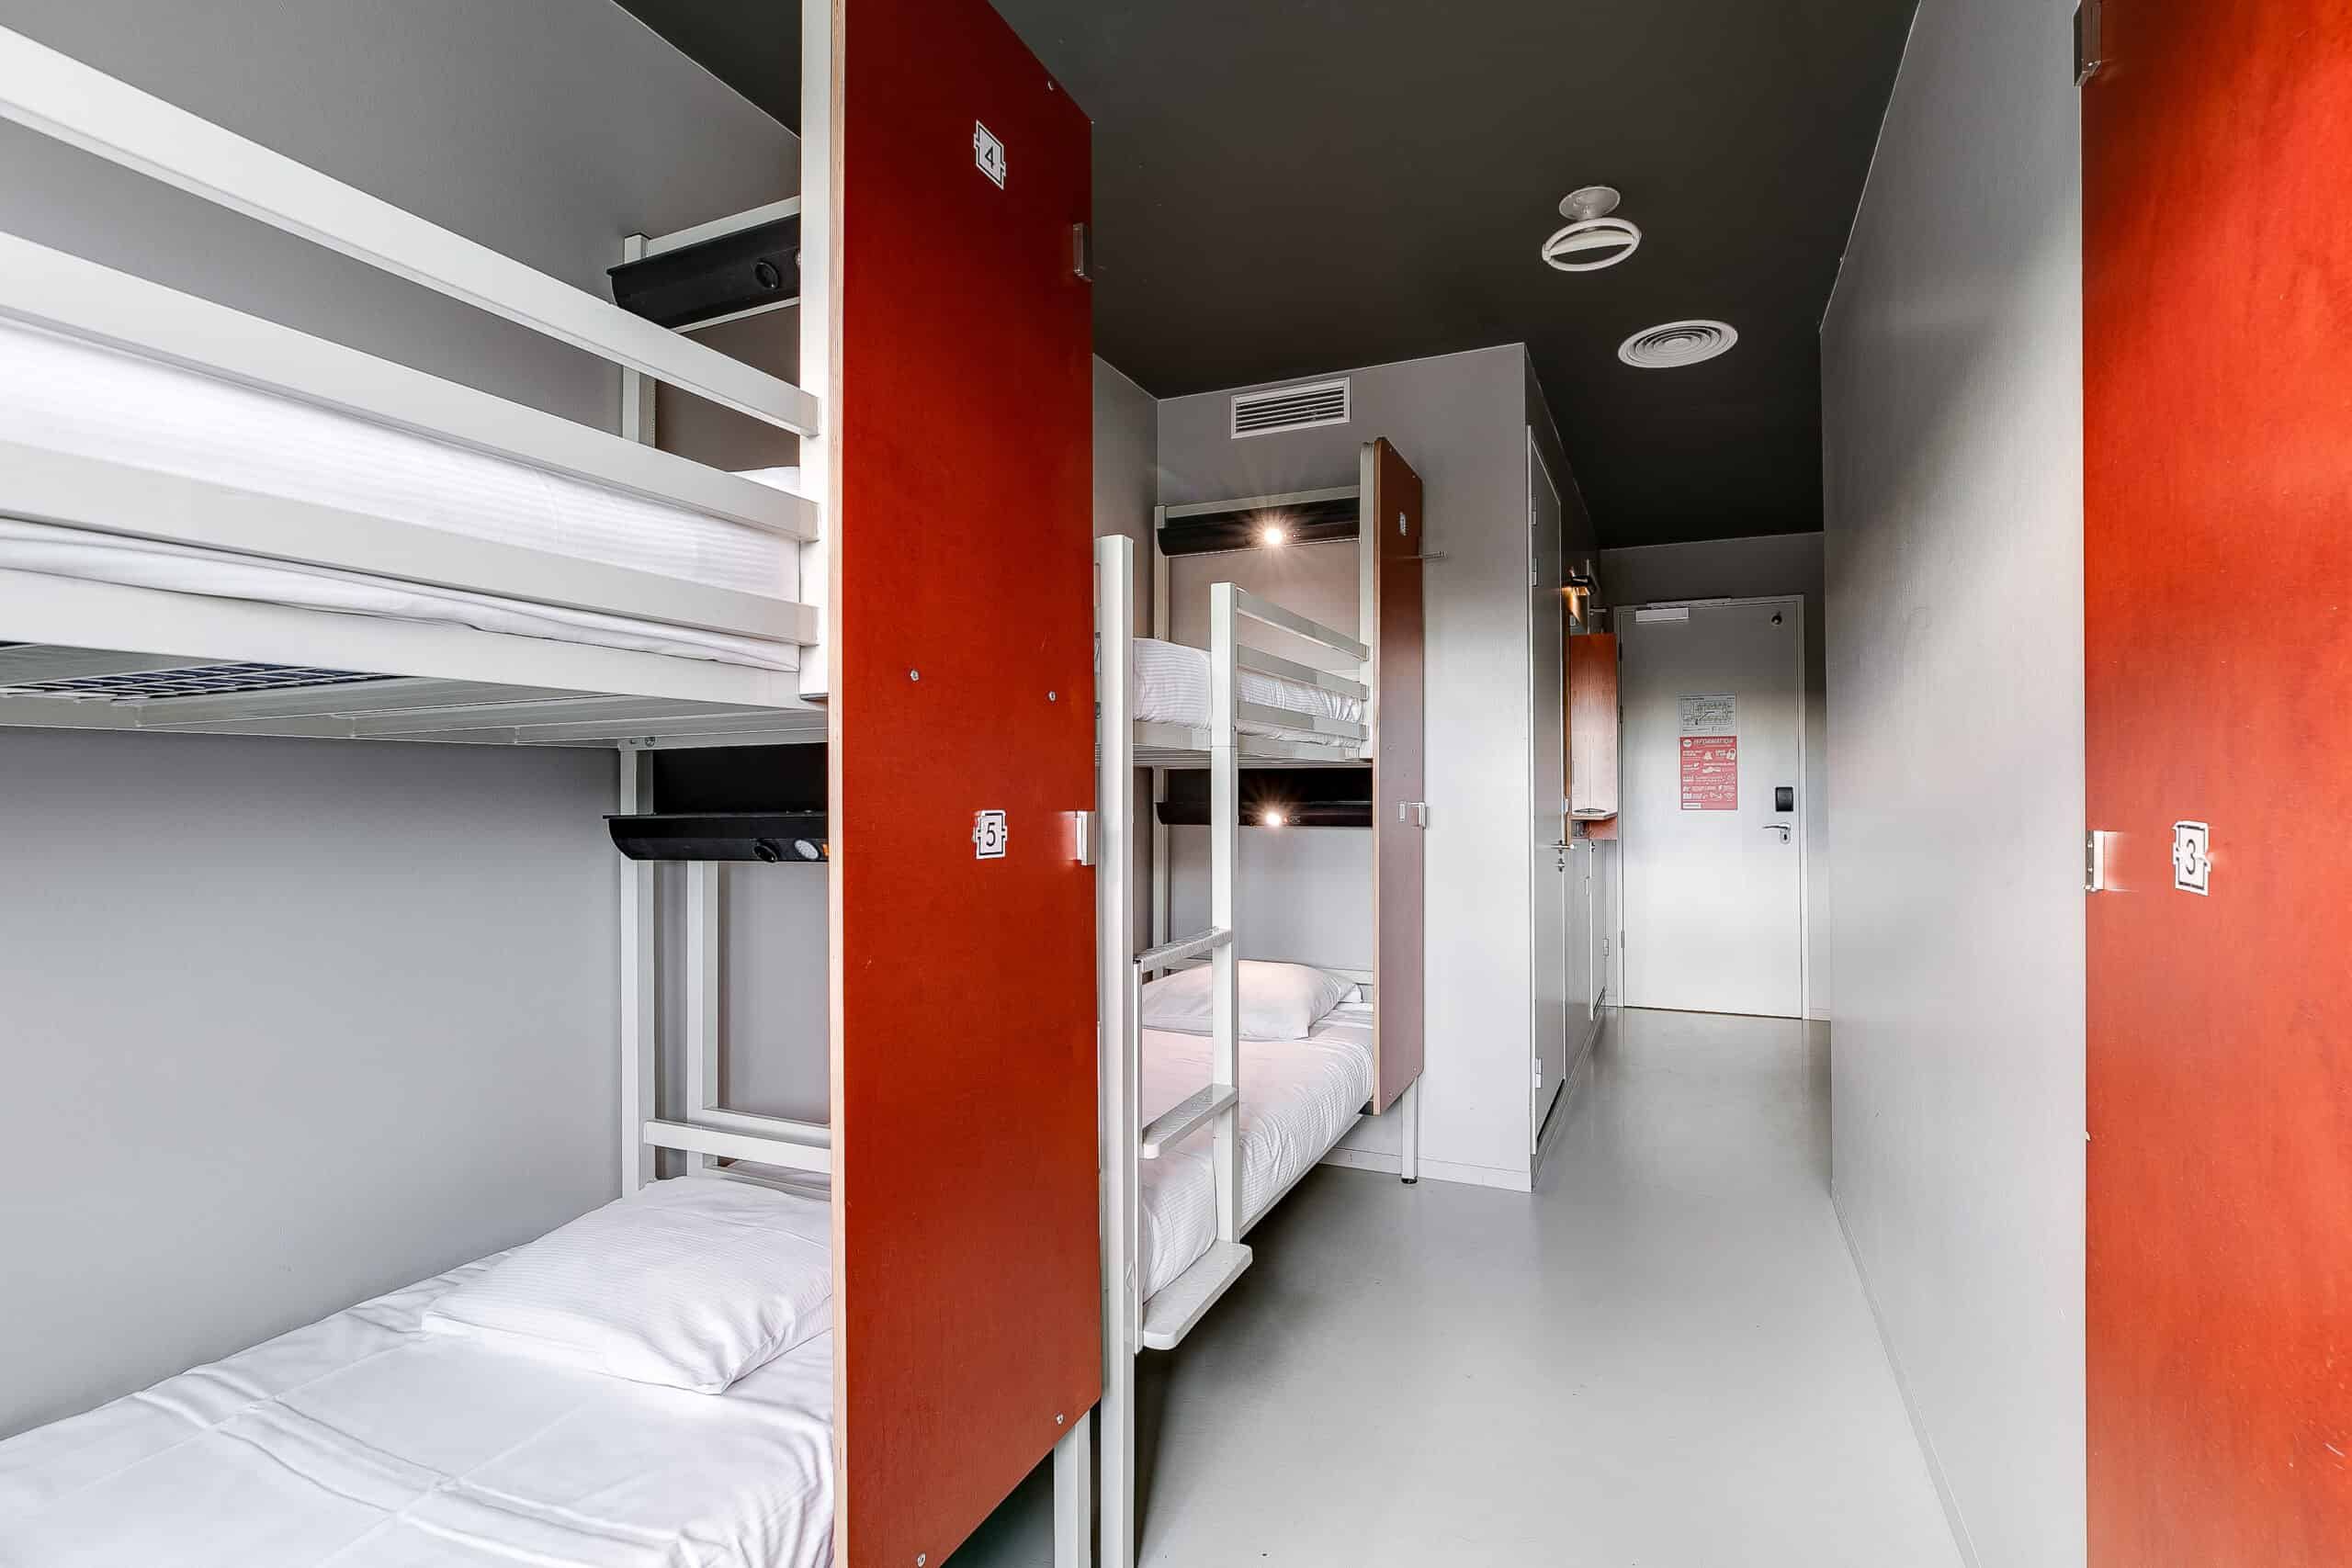 Dormitório com beliches no Clinknoord Amsterdam